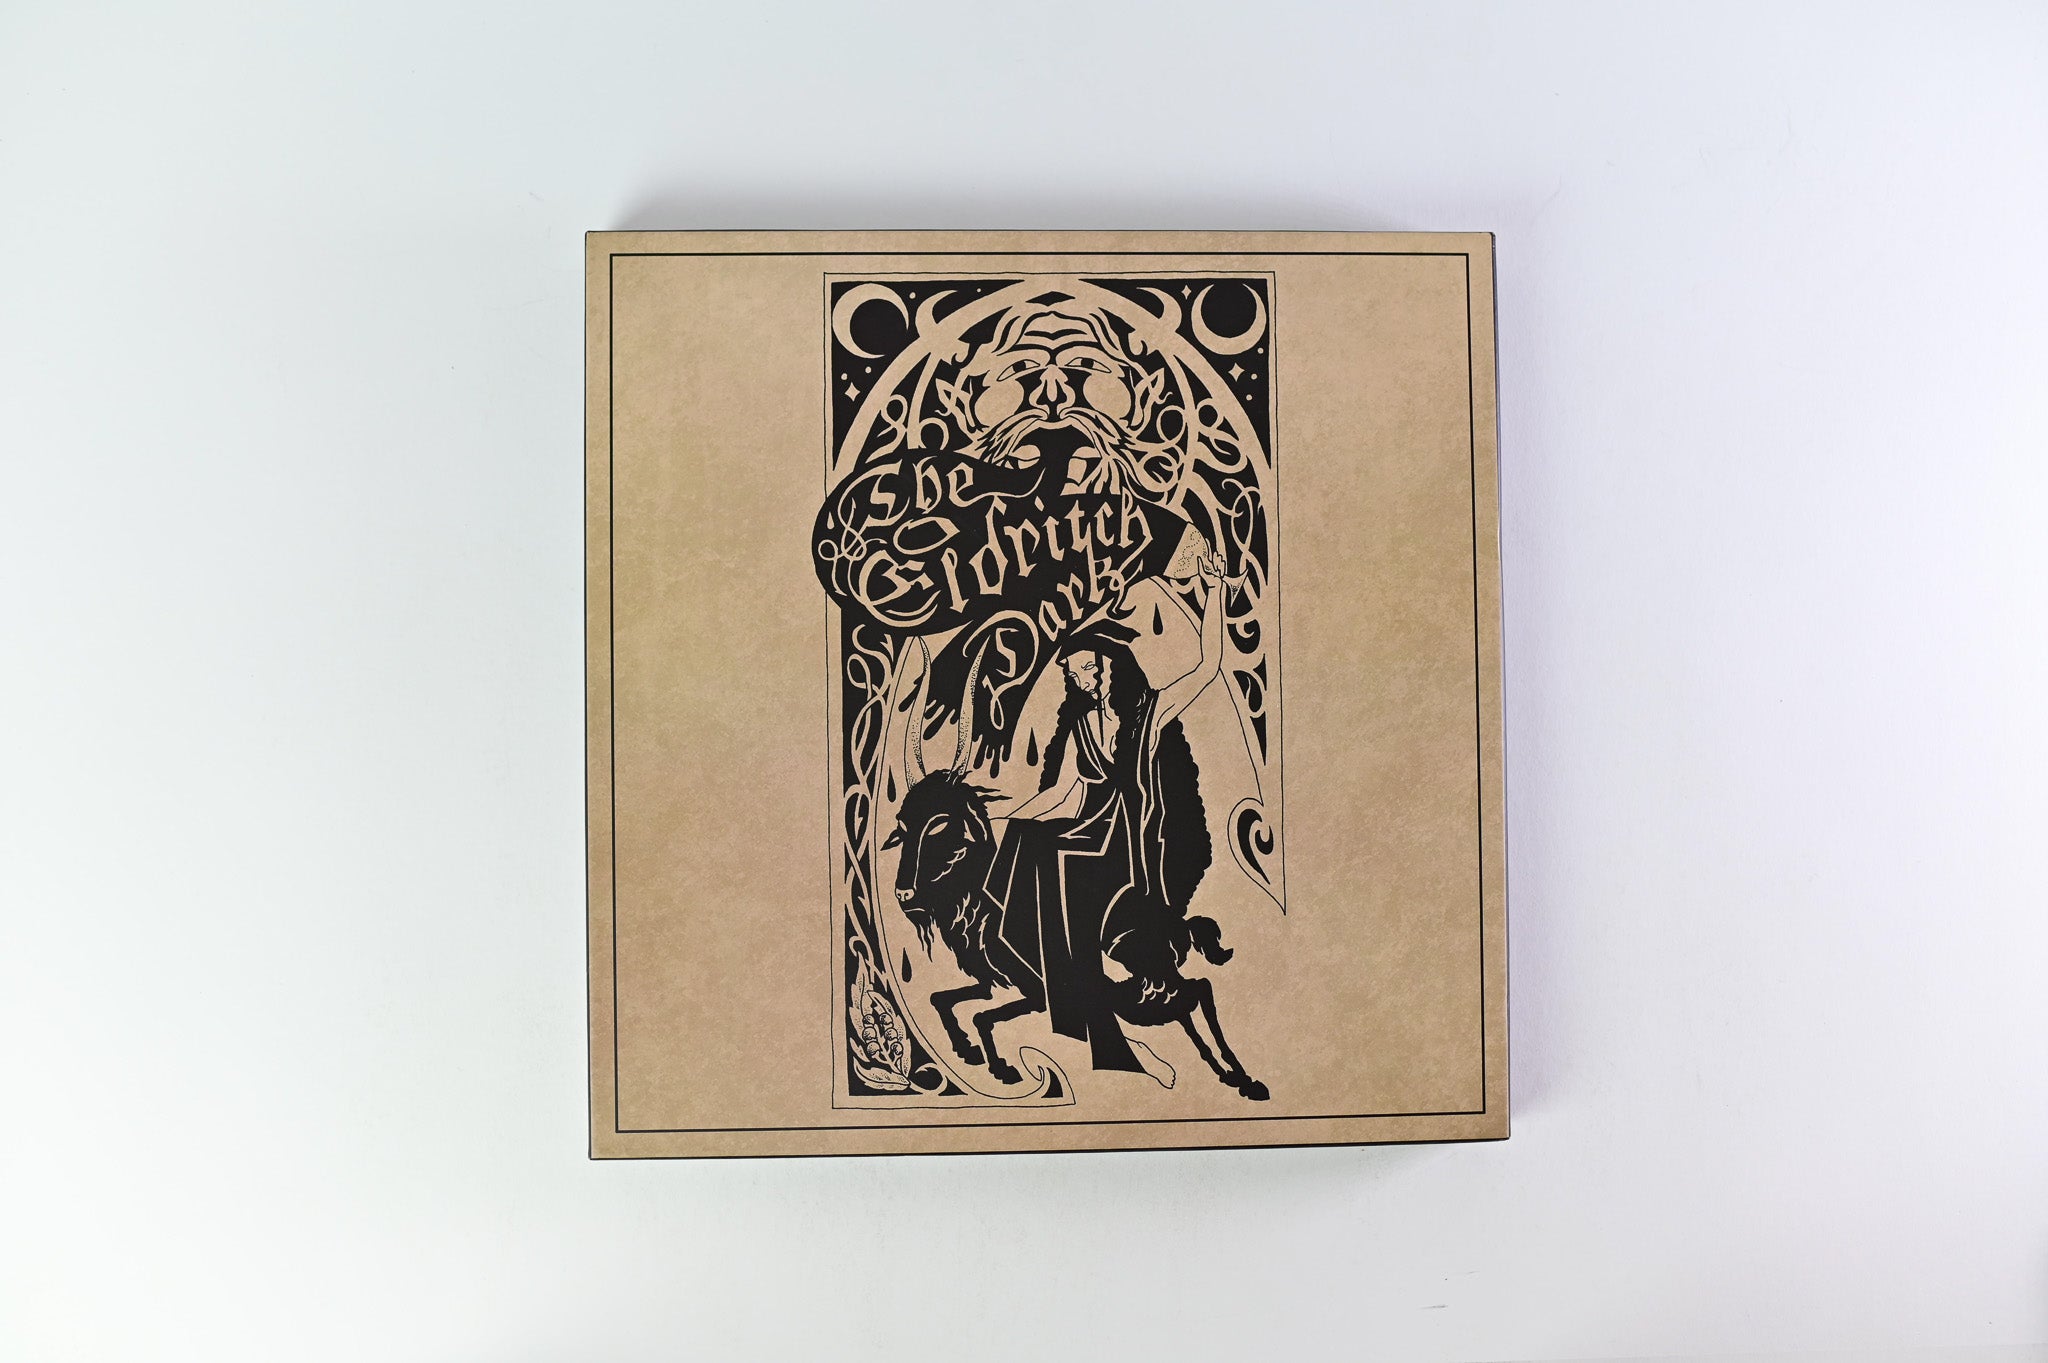 Blood Ceremony - The Eldritch Dark on Rise Above Ltd Edition Die Hard Purple Vinyl Box Set